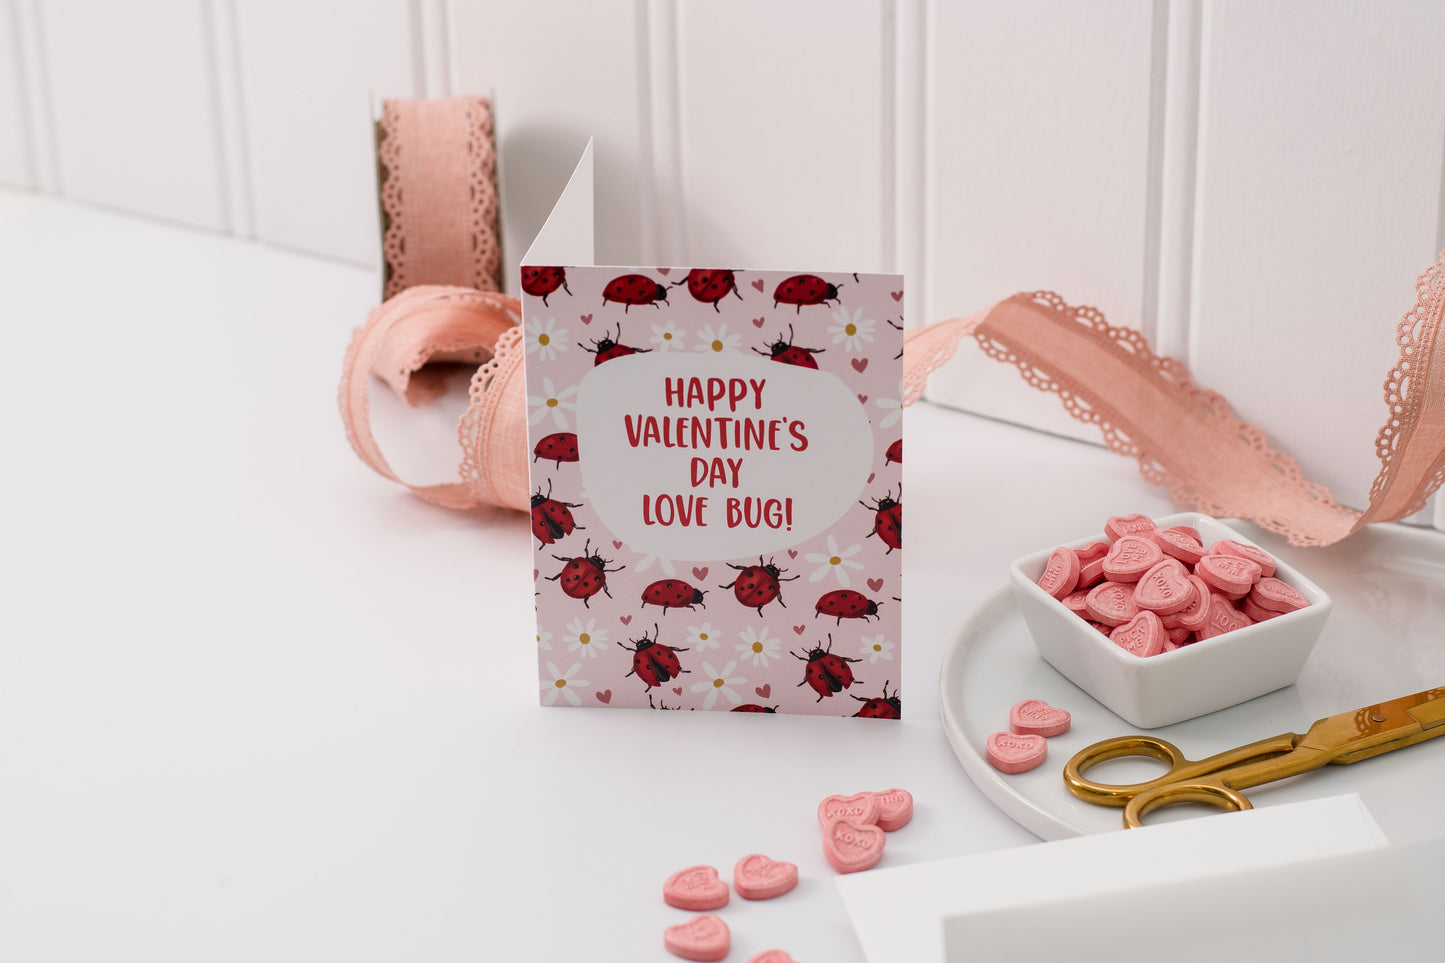 Happy Valentine's Day Love Bug - Greeting Card